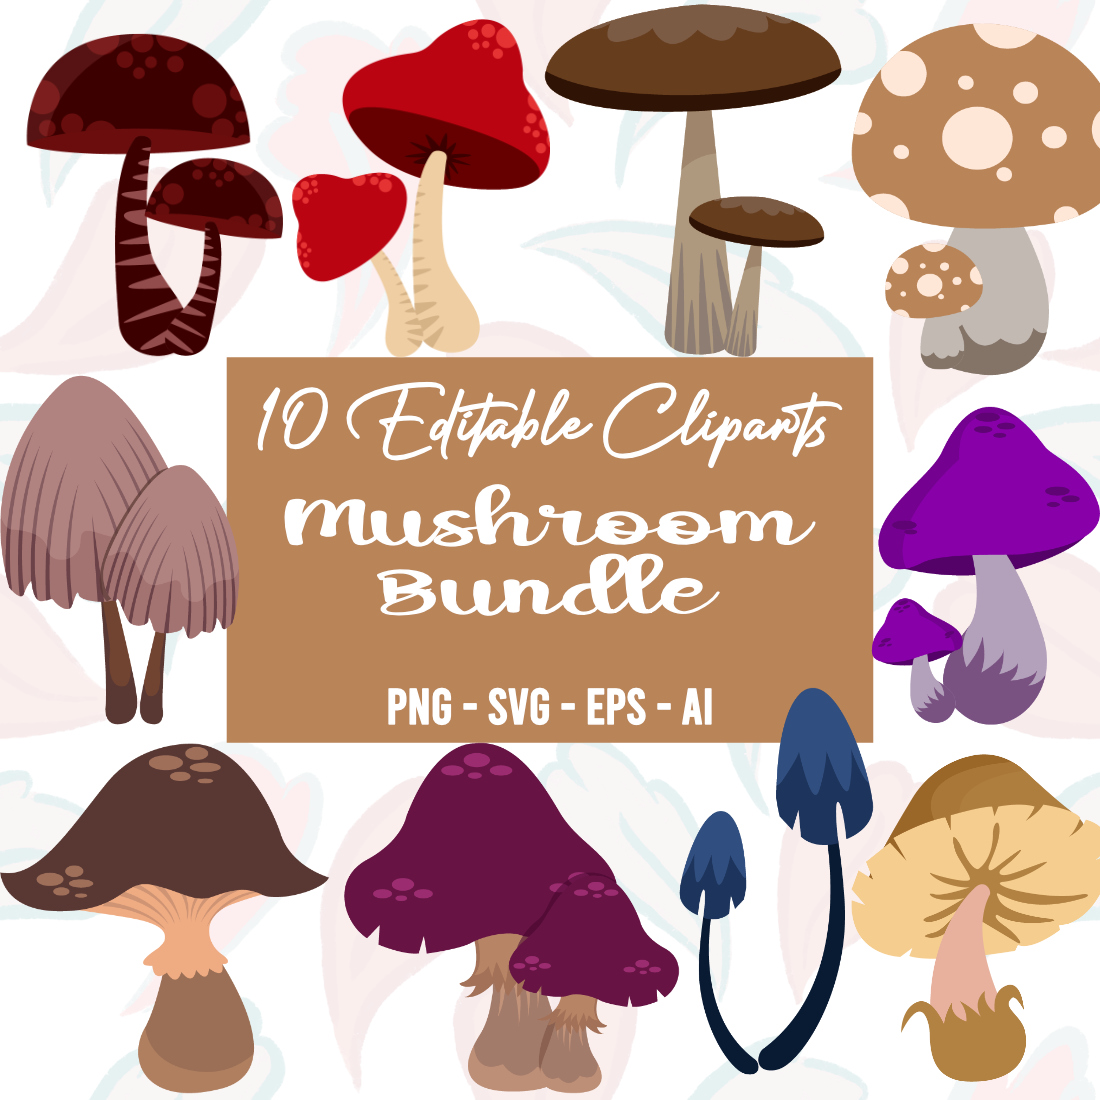 Mushroom Editable Clipart Graphics Set cover image.